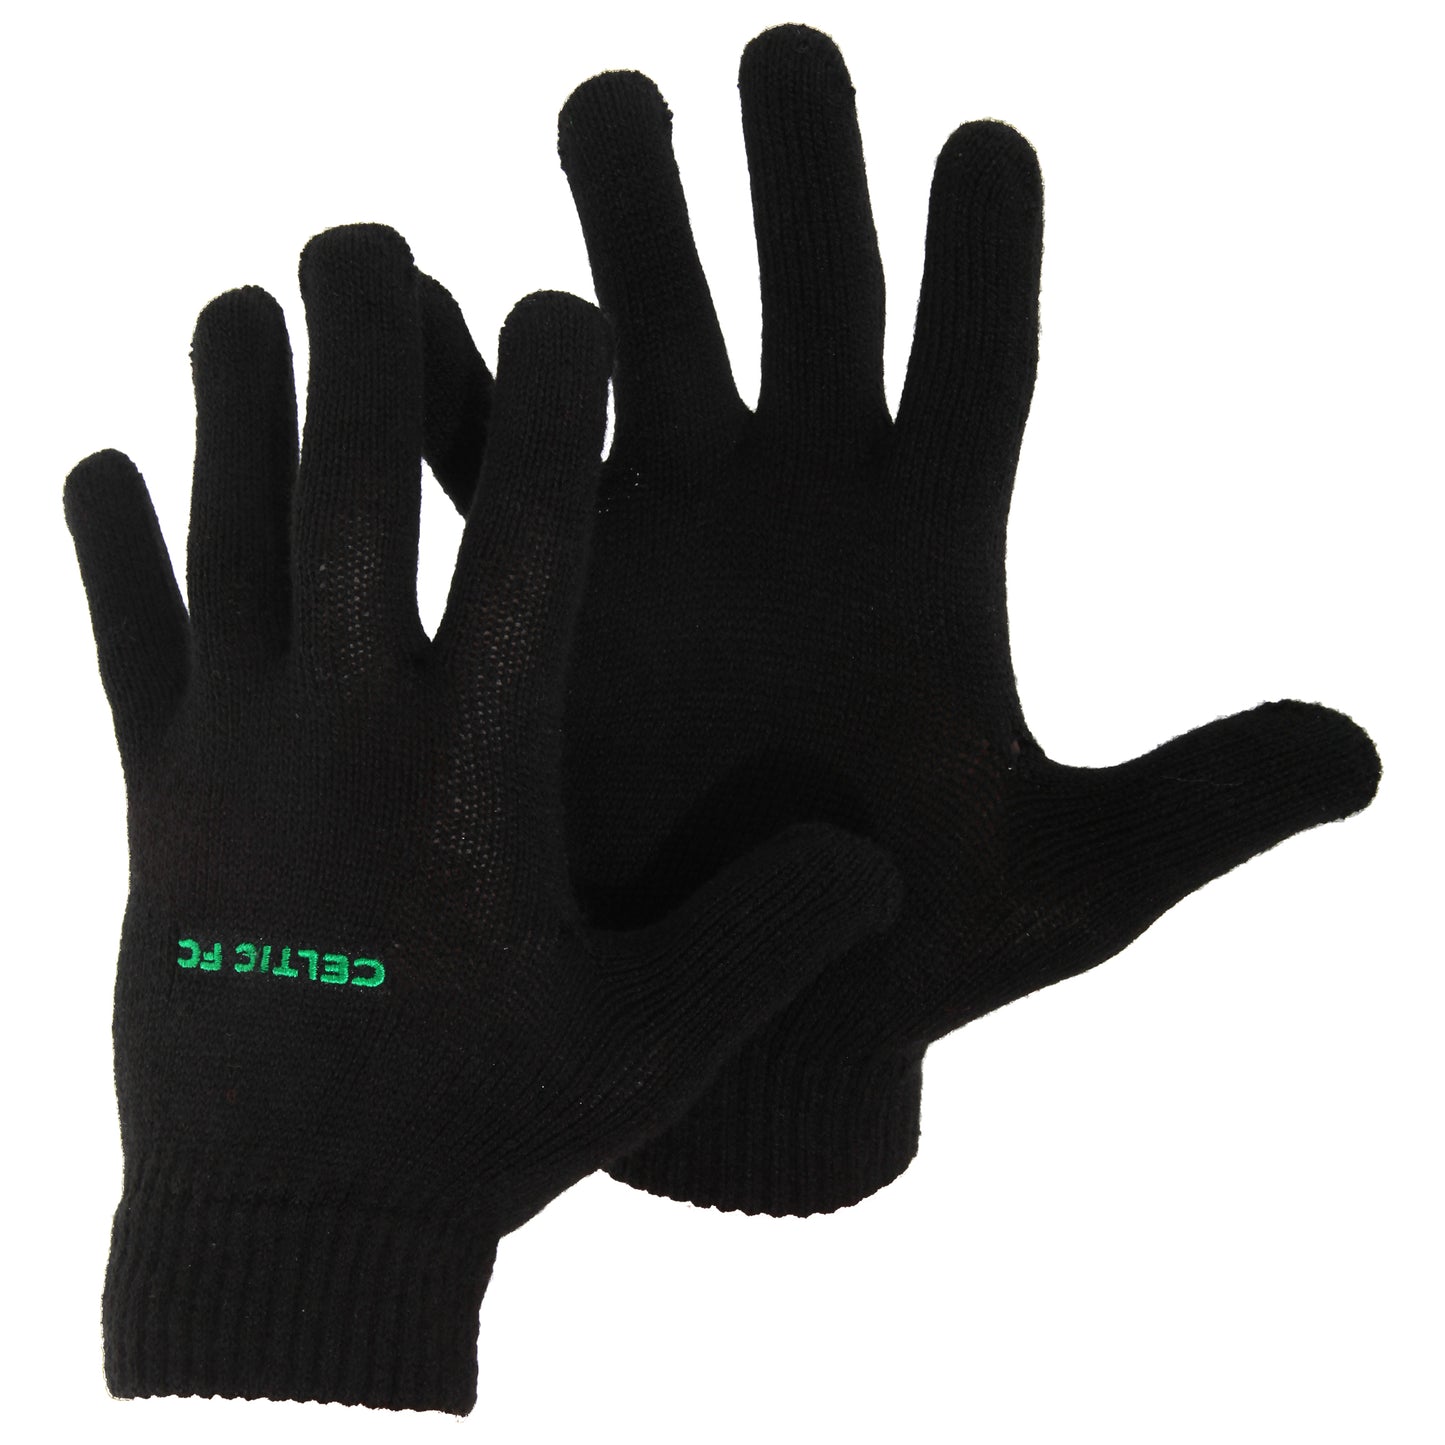 Black football winter knit gloves Celtic or Everton